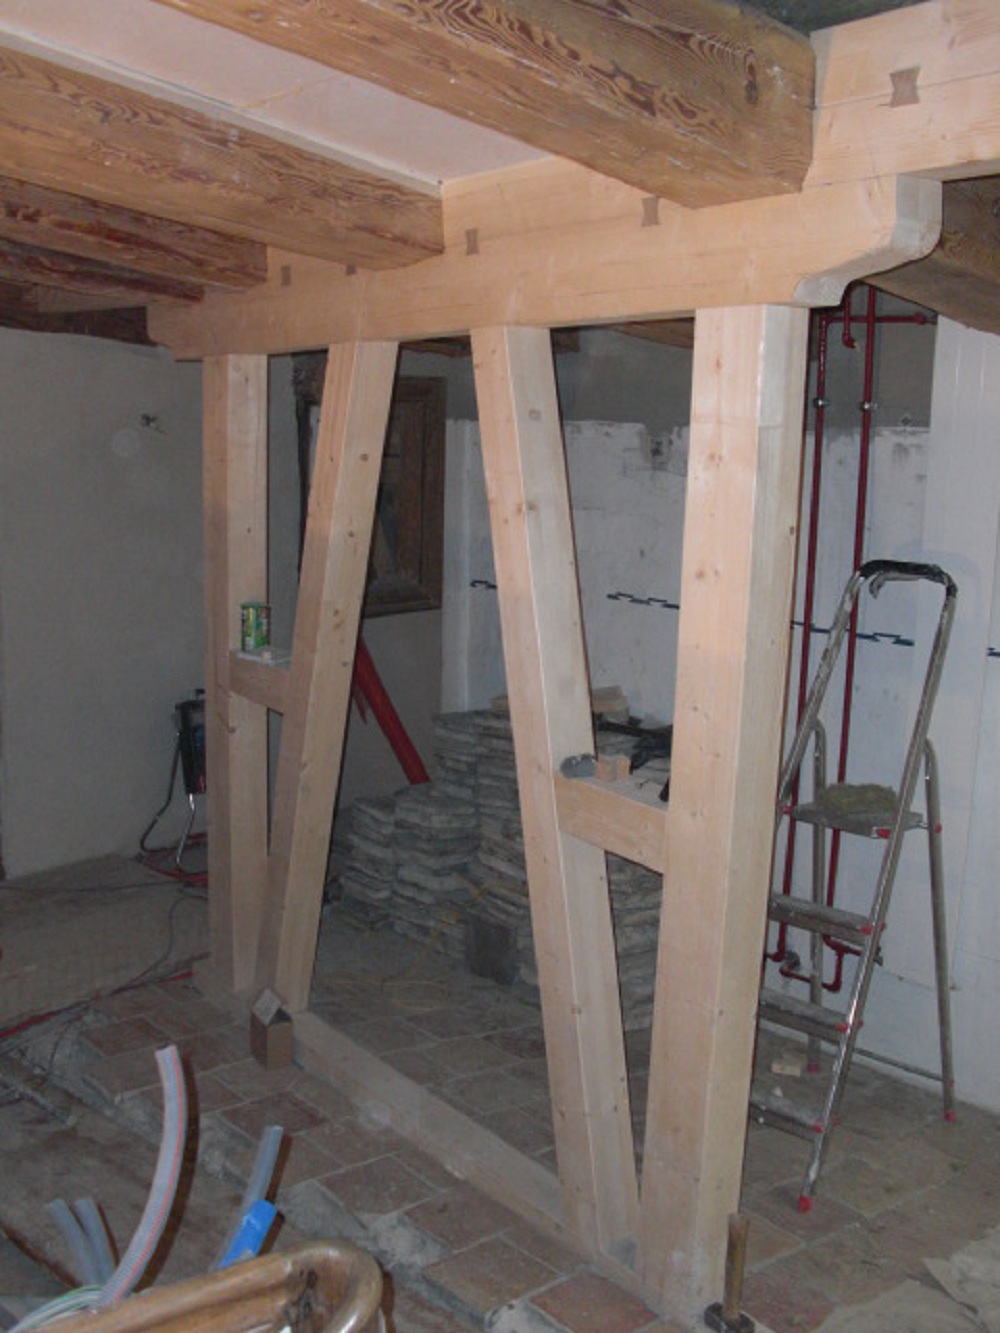 Ersetzen der inneren Holzkonstruktion, neues Dach, Wärmedämmung